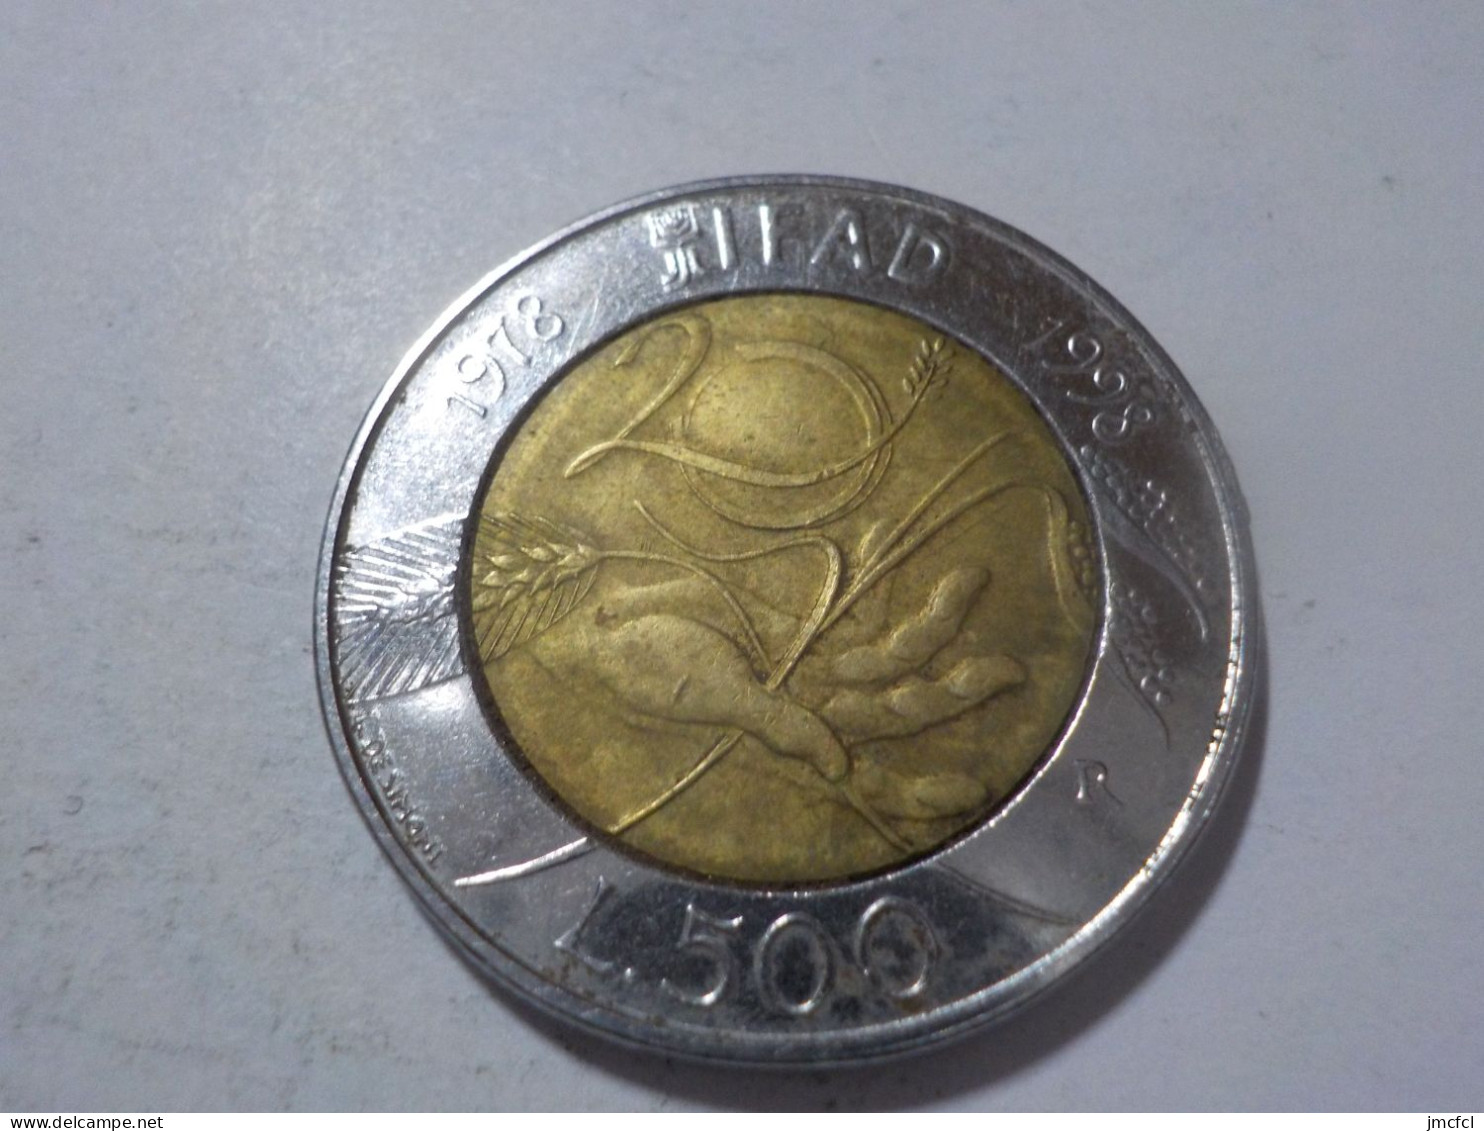 ITALIE  1998   500 Lire - 500 Lire